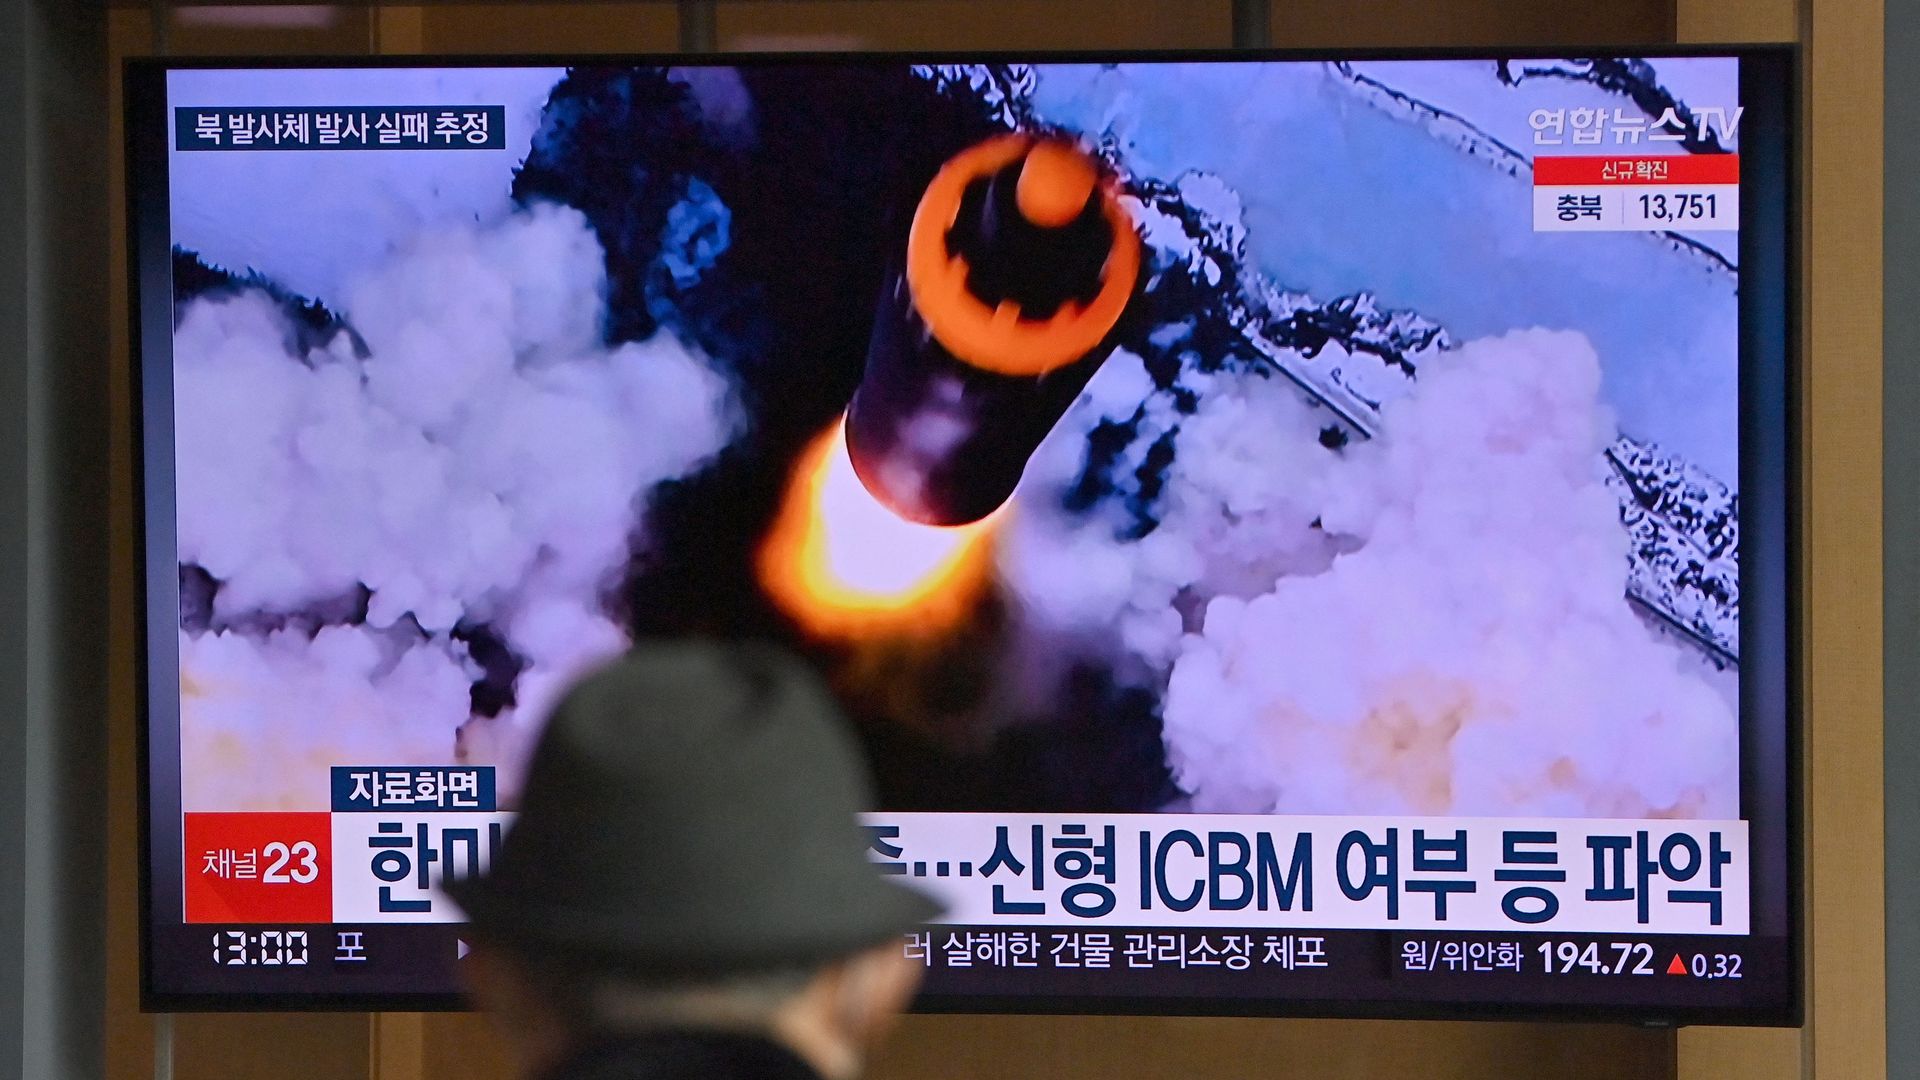 TV showing North Korea's ICBM test